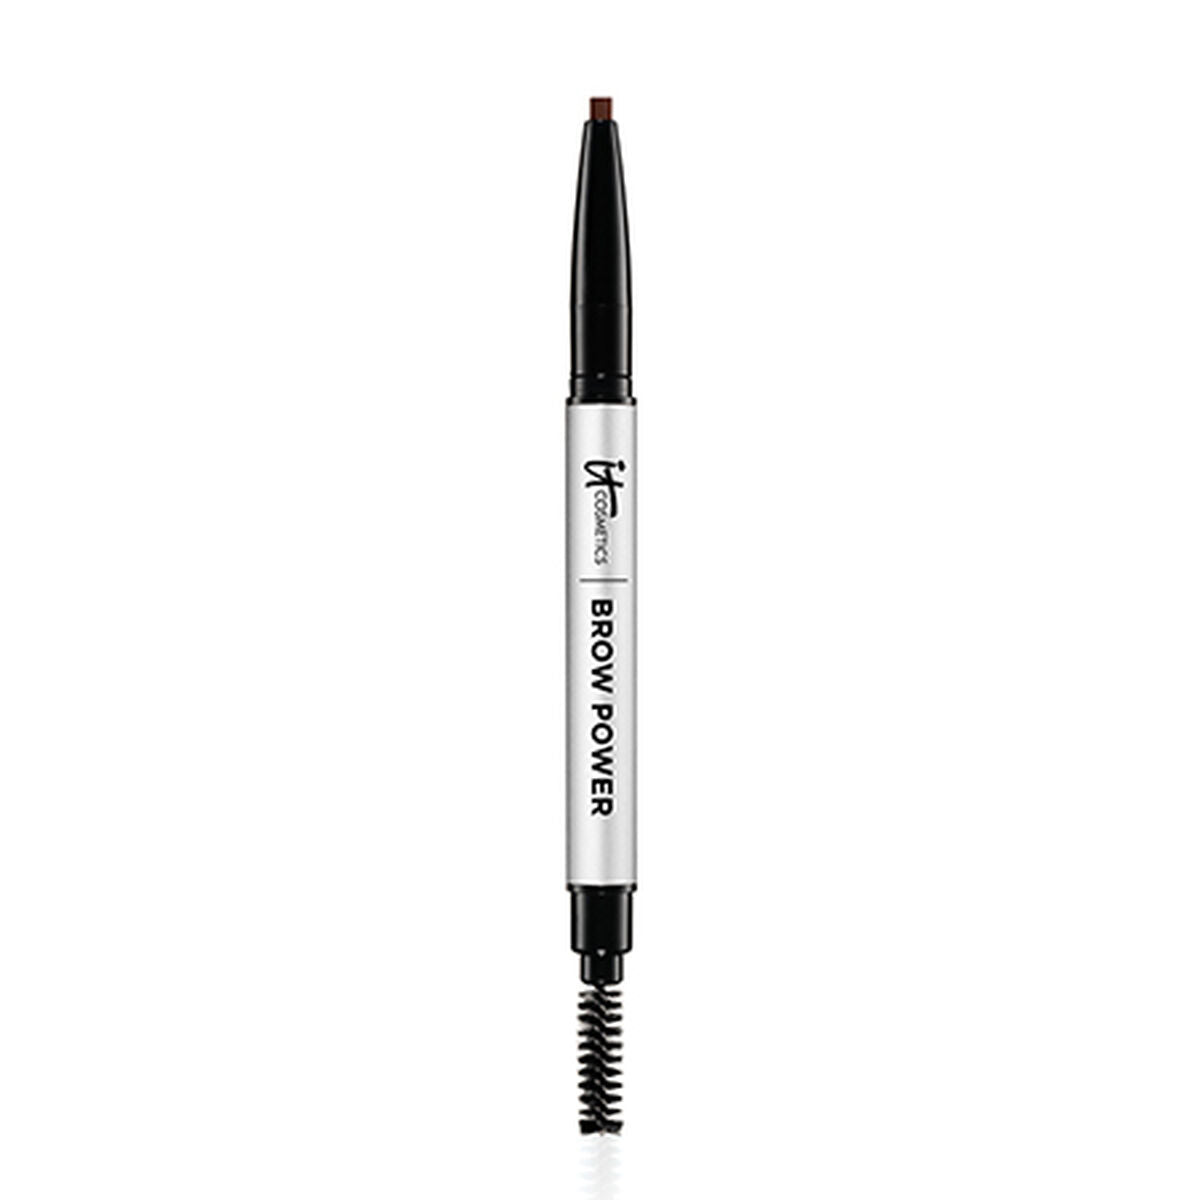 Eyebrow Pencil It Cosmetics Brow Power Universal Auburn 2-in-1 (16 g)-0